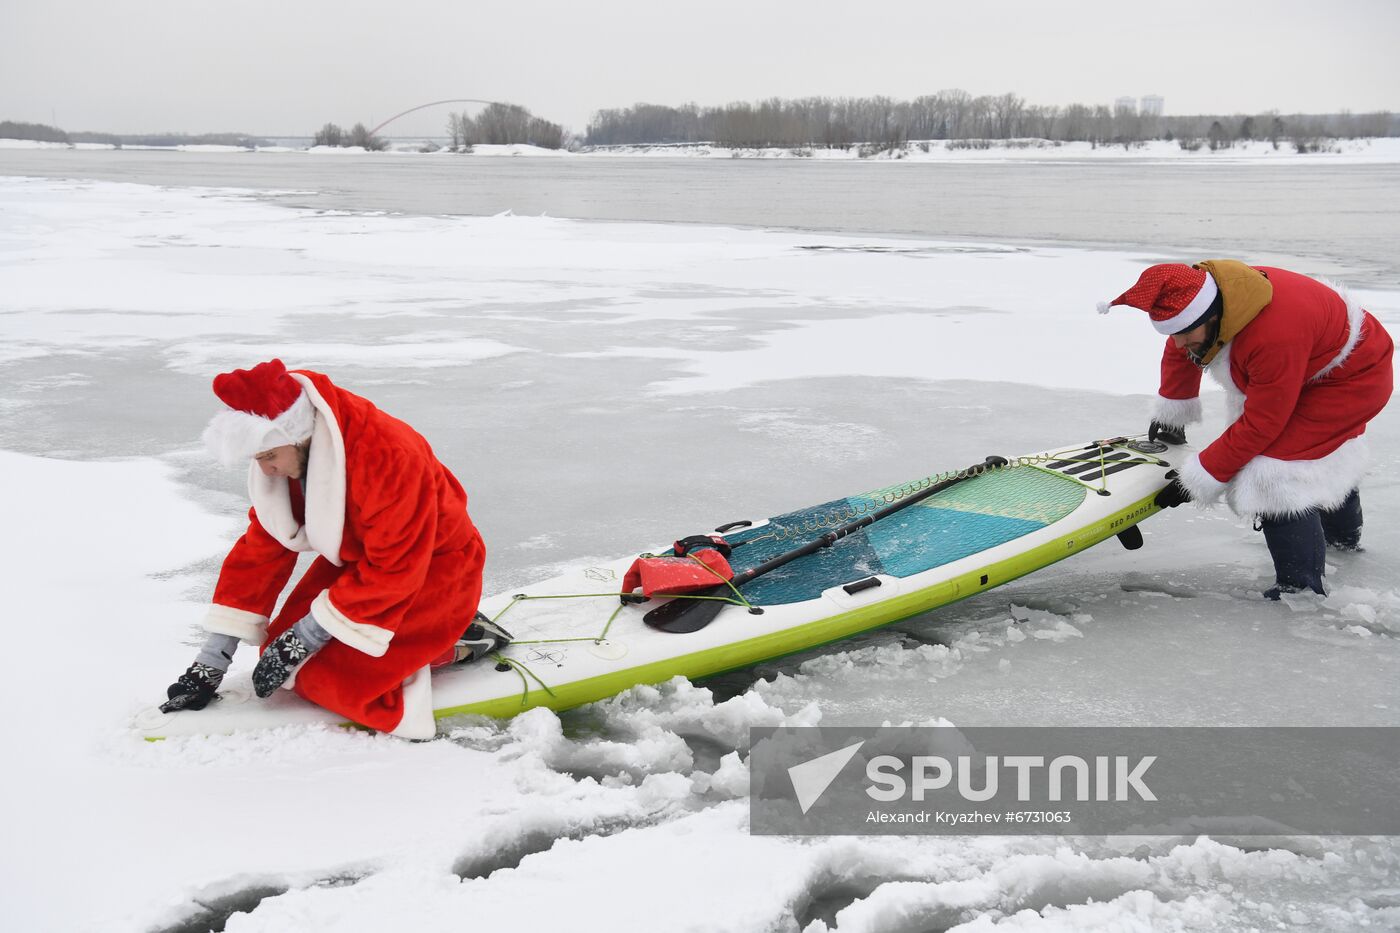 Russia New Year Festive Season Preparations 